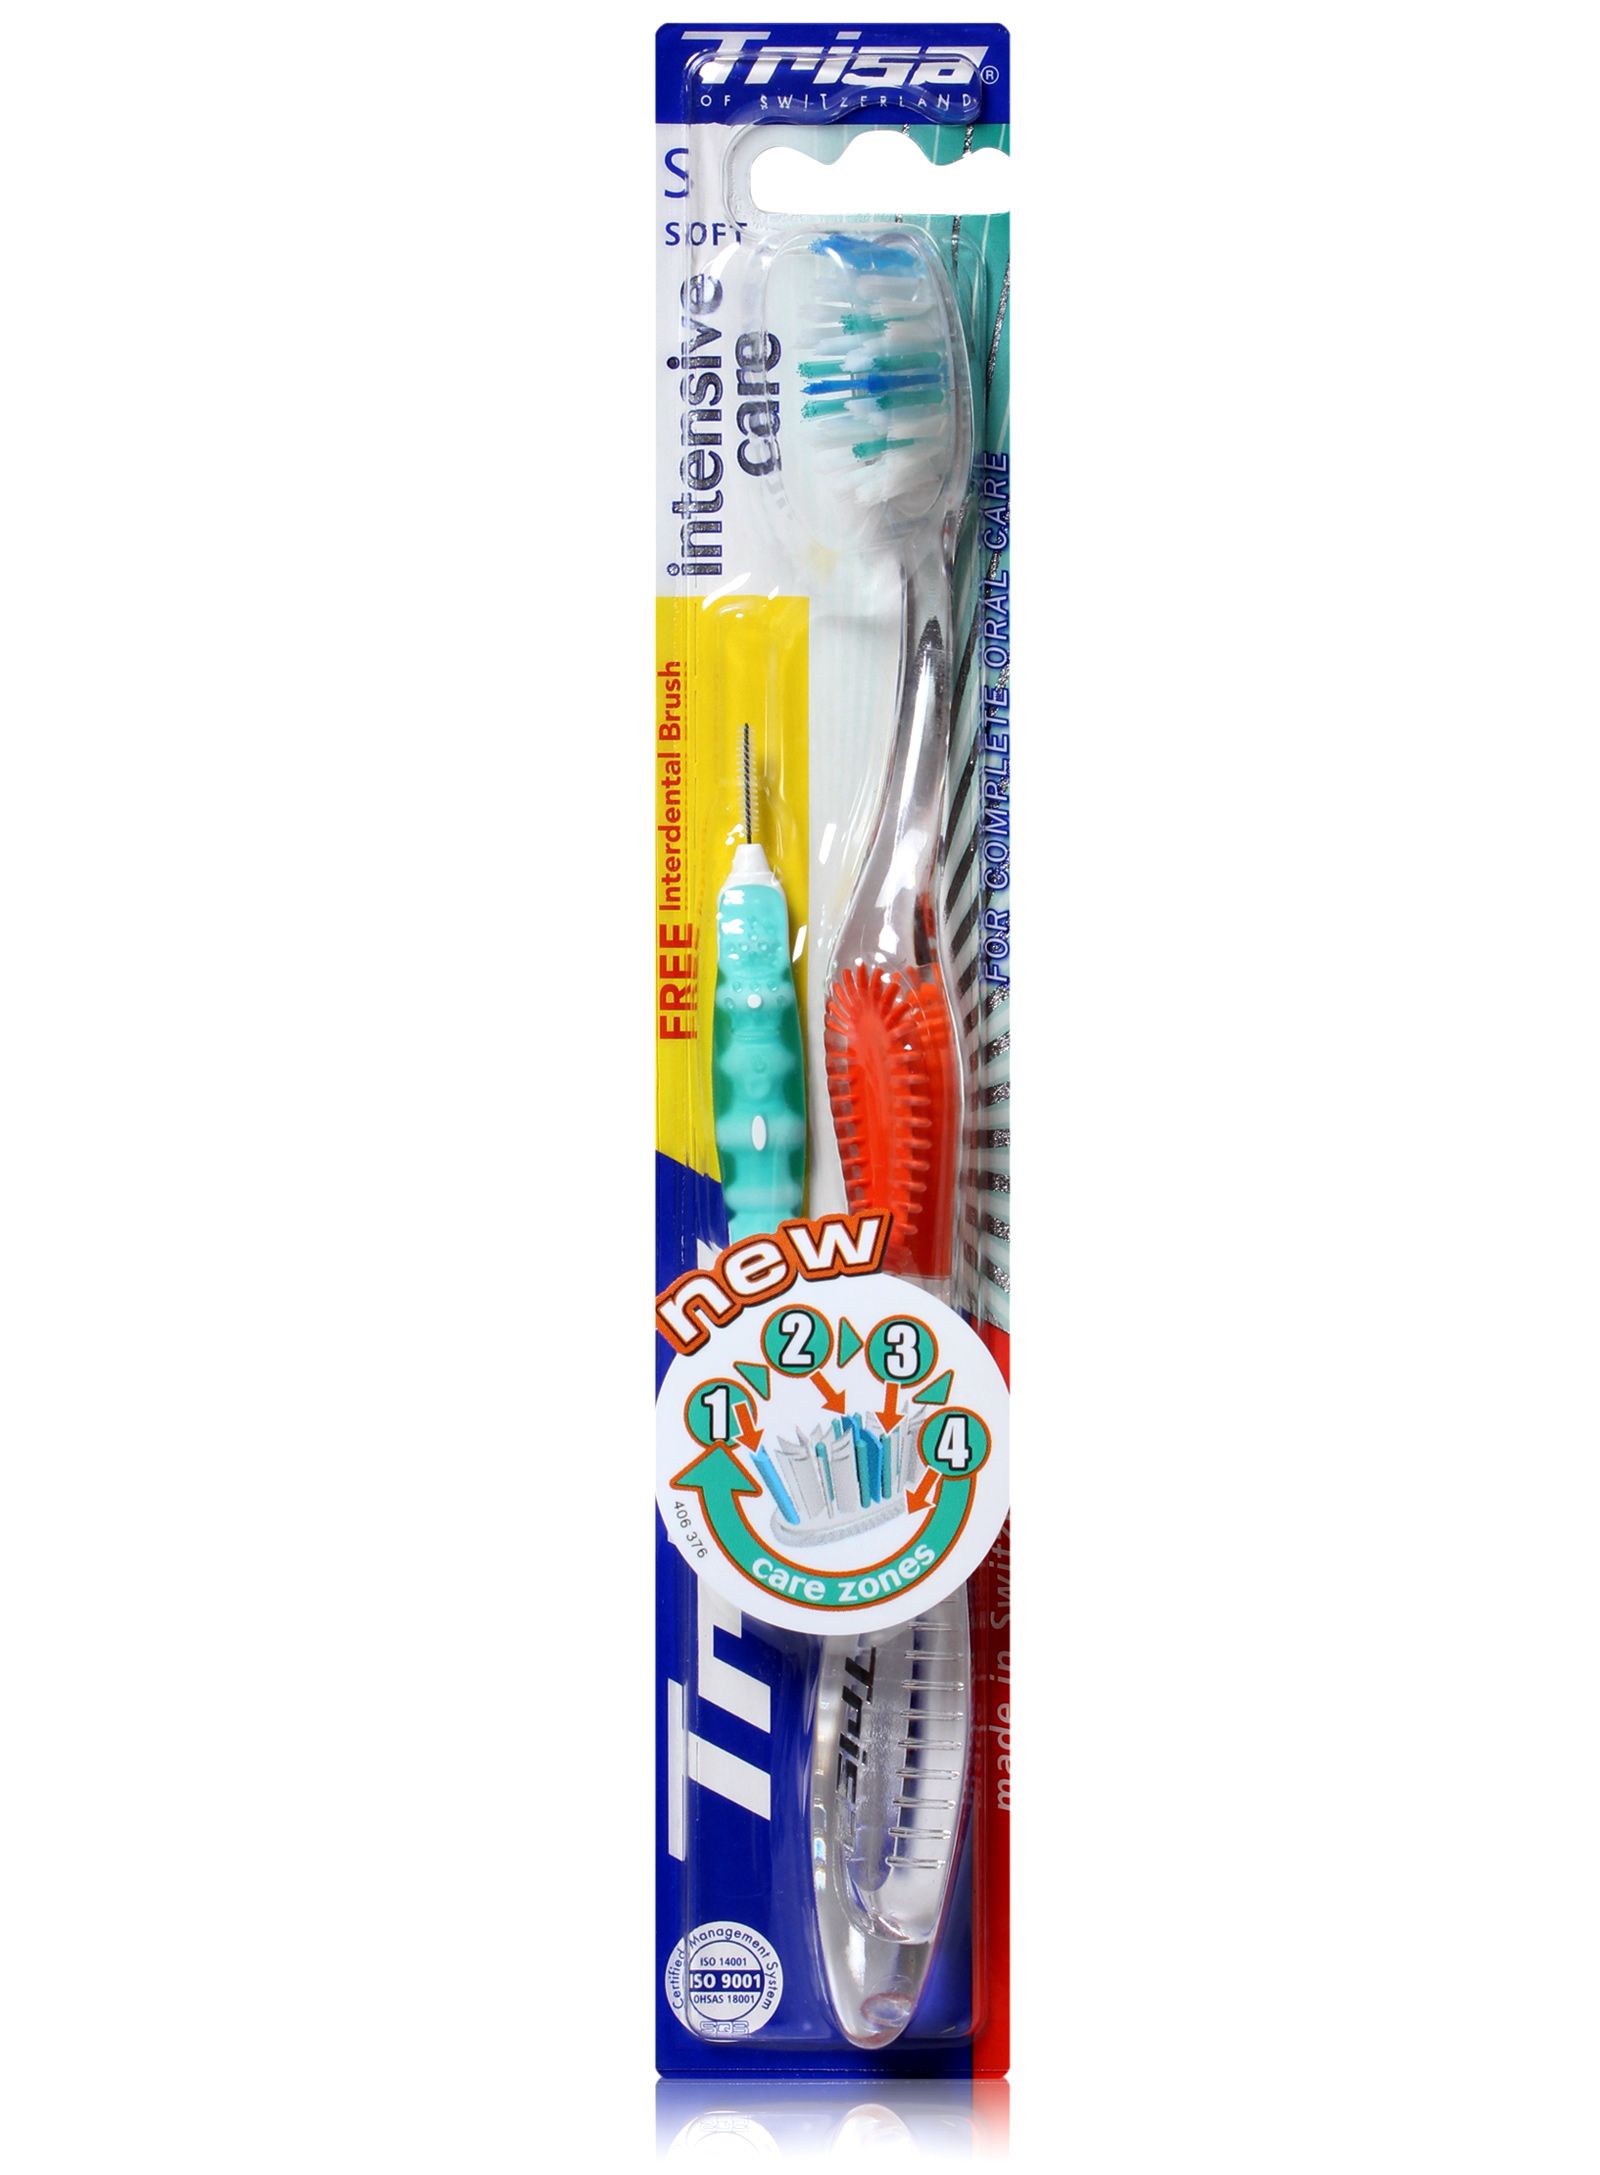 Trisa- Intensive Care Interdental Toothbrush - Soft Orange